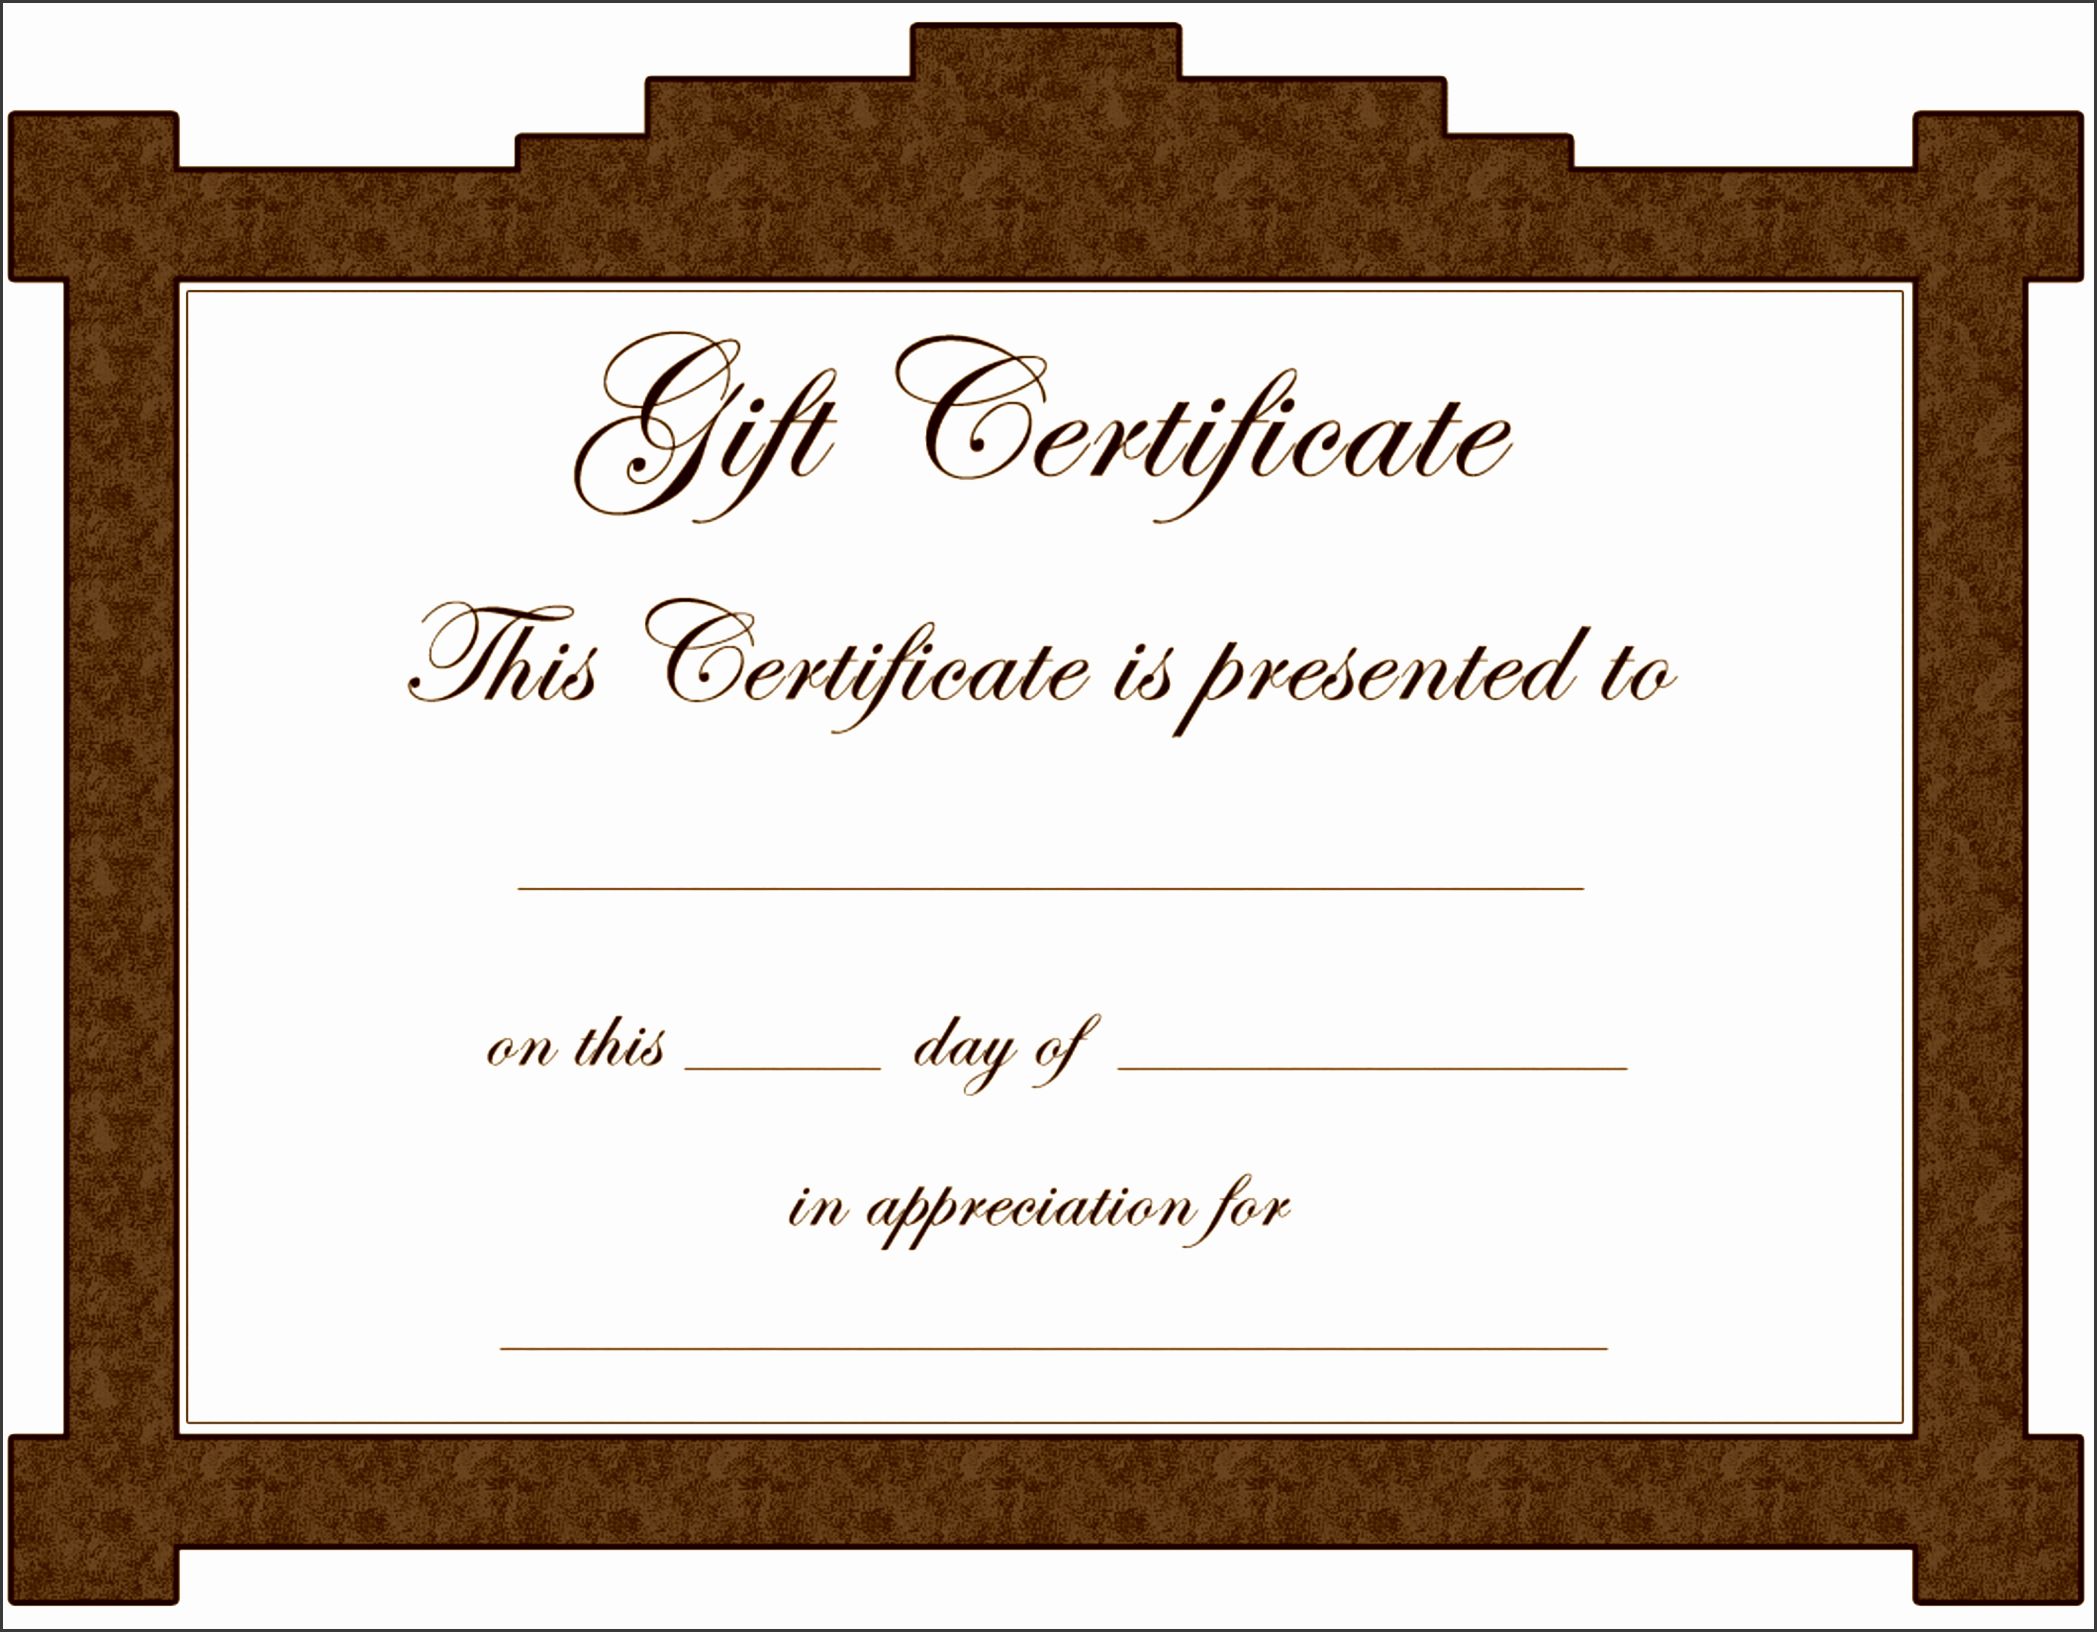 avon t certificate template